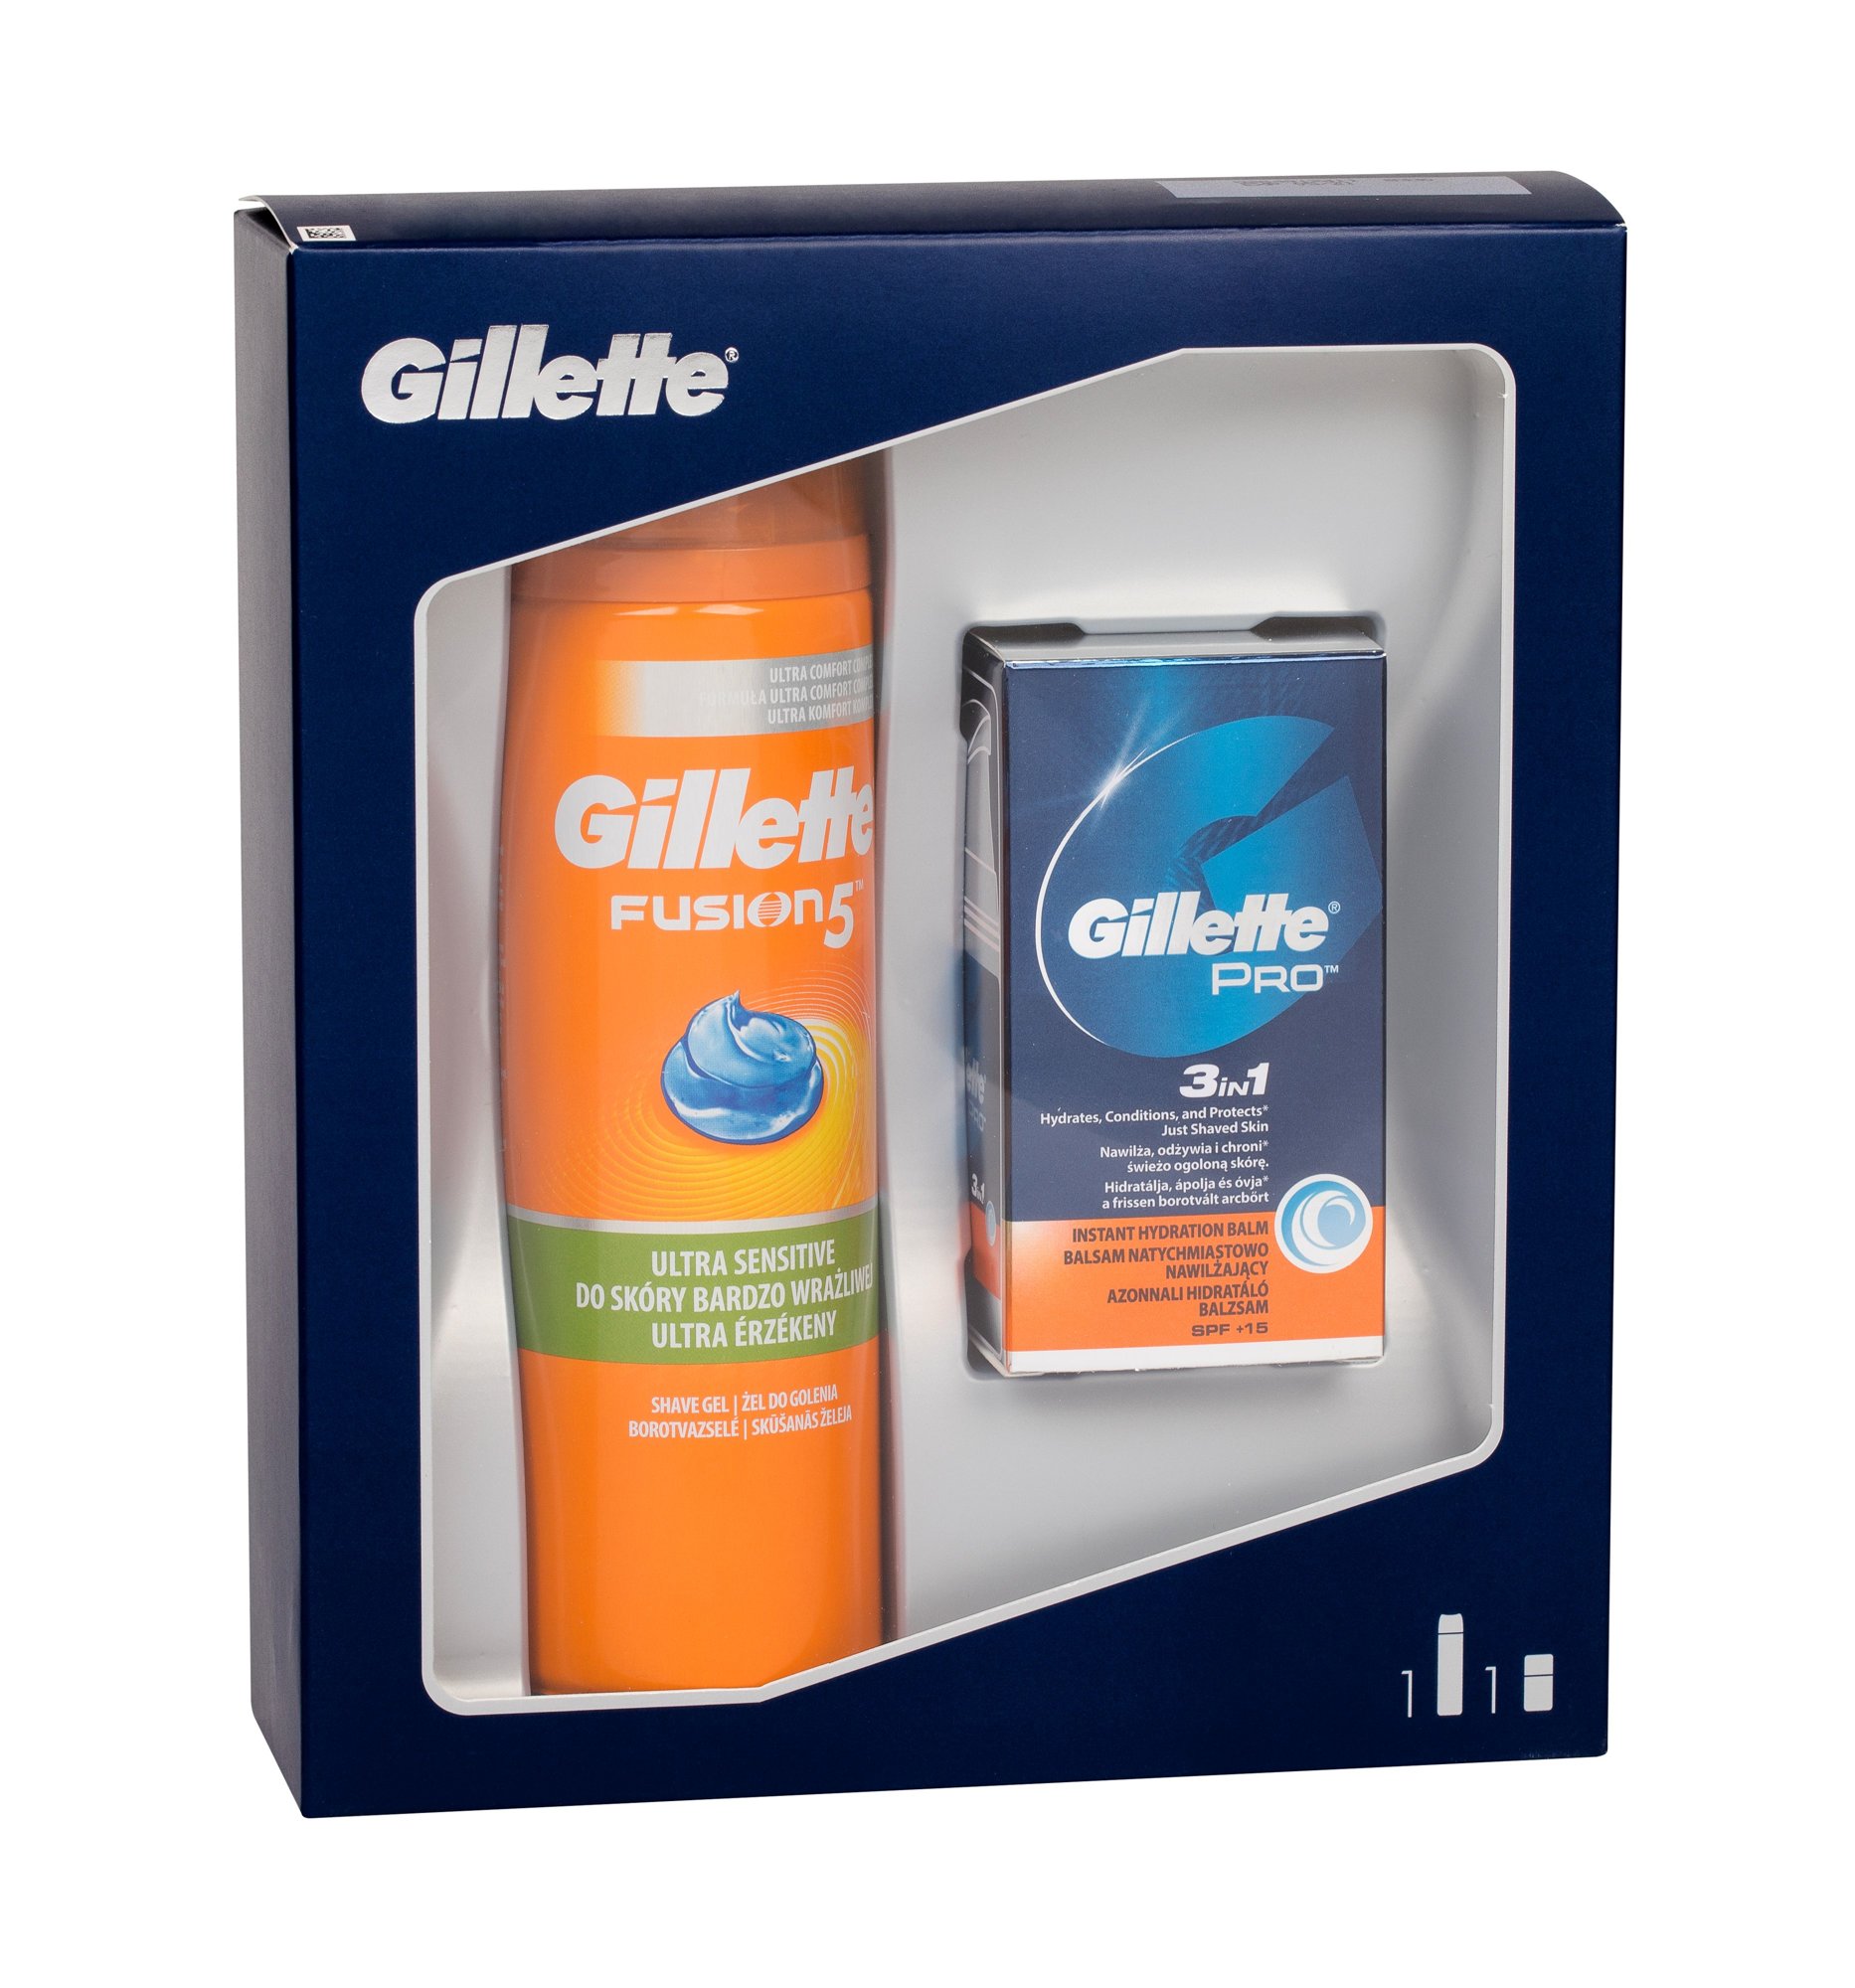 Gillette Fusion 5 Ultra Sensitive + Cooling 200ml Shaving Gel 200 ml + Aftershave Balm Gillette Pro 3in1 SPF15 50 ml skutimosi gelis Rinkinys (Pažeista pakuotė)